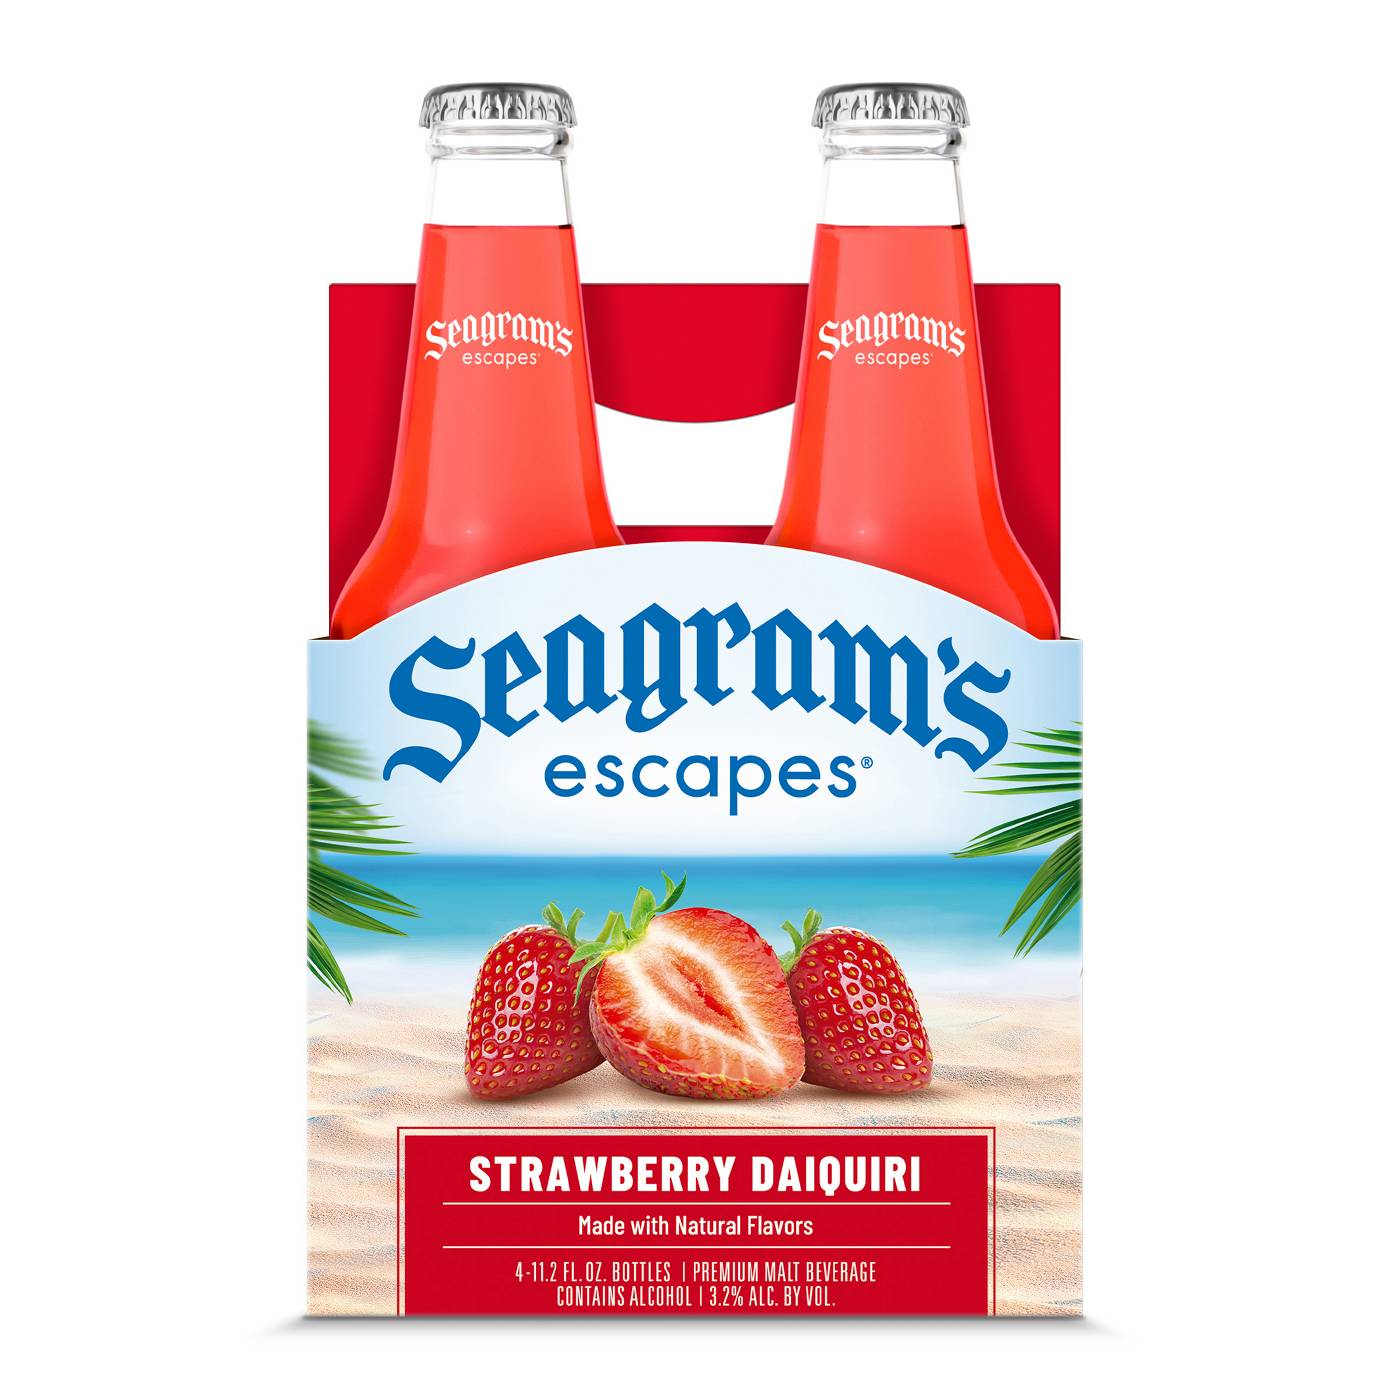 Seagram's Escapes Strawberry Daiquiri Bottles 4 pk; image 1 of 2